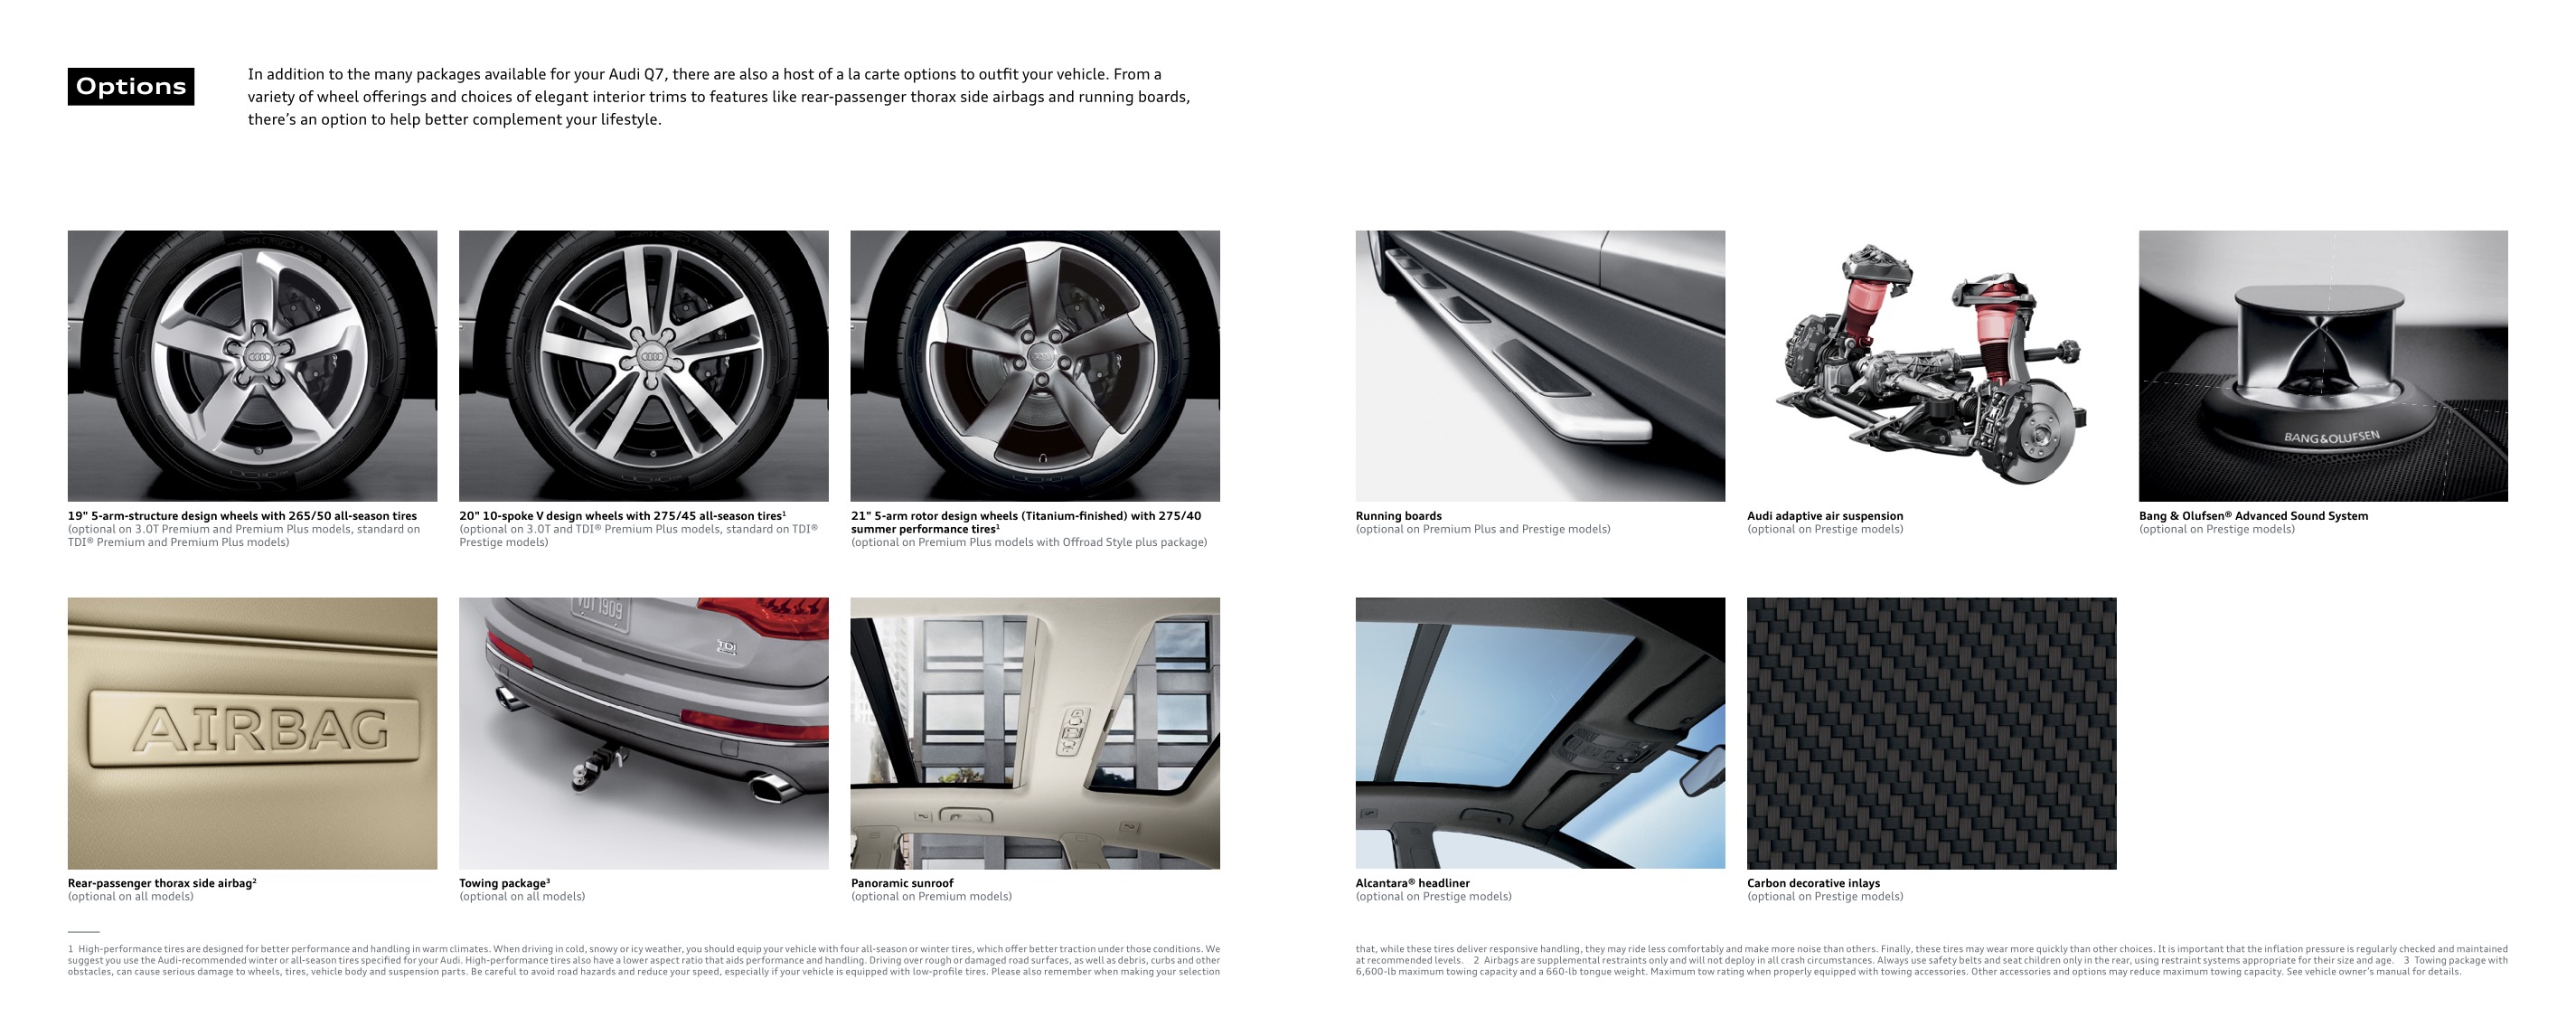 2015 Audi Q7 Brochure Page 32